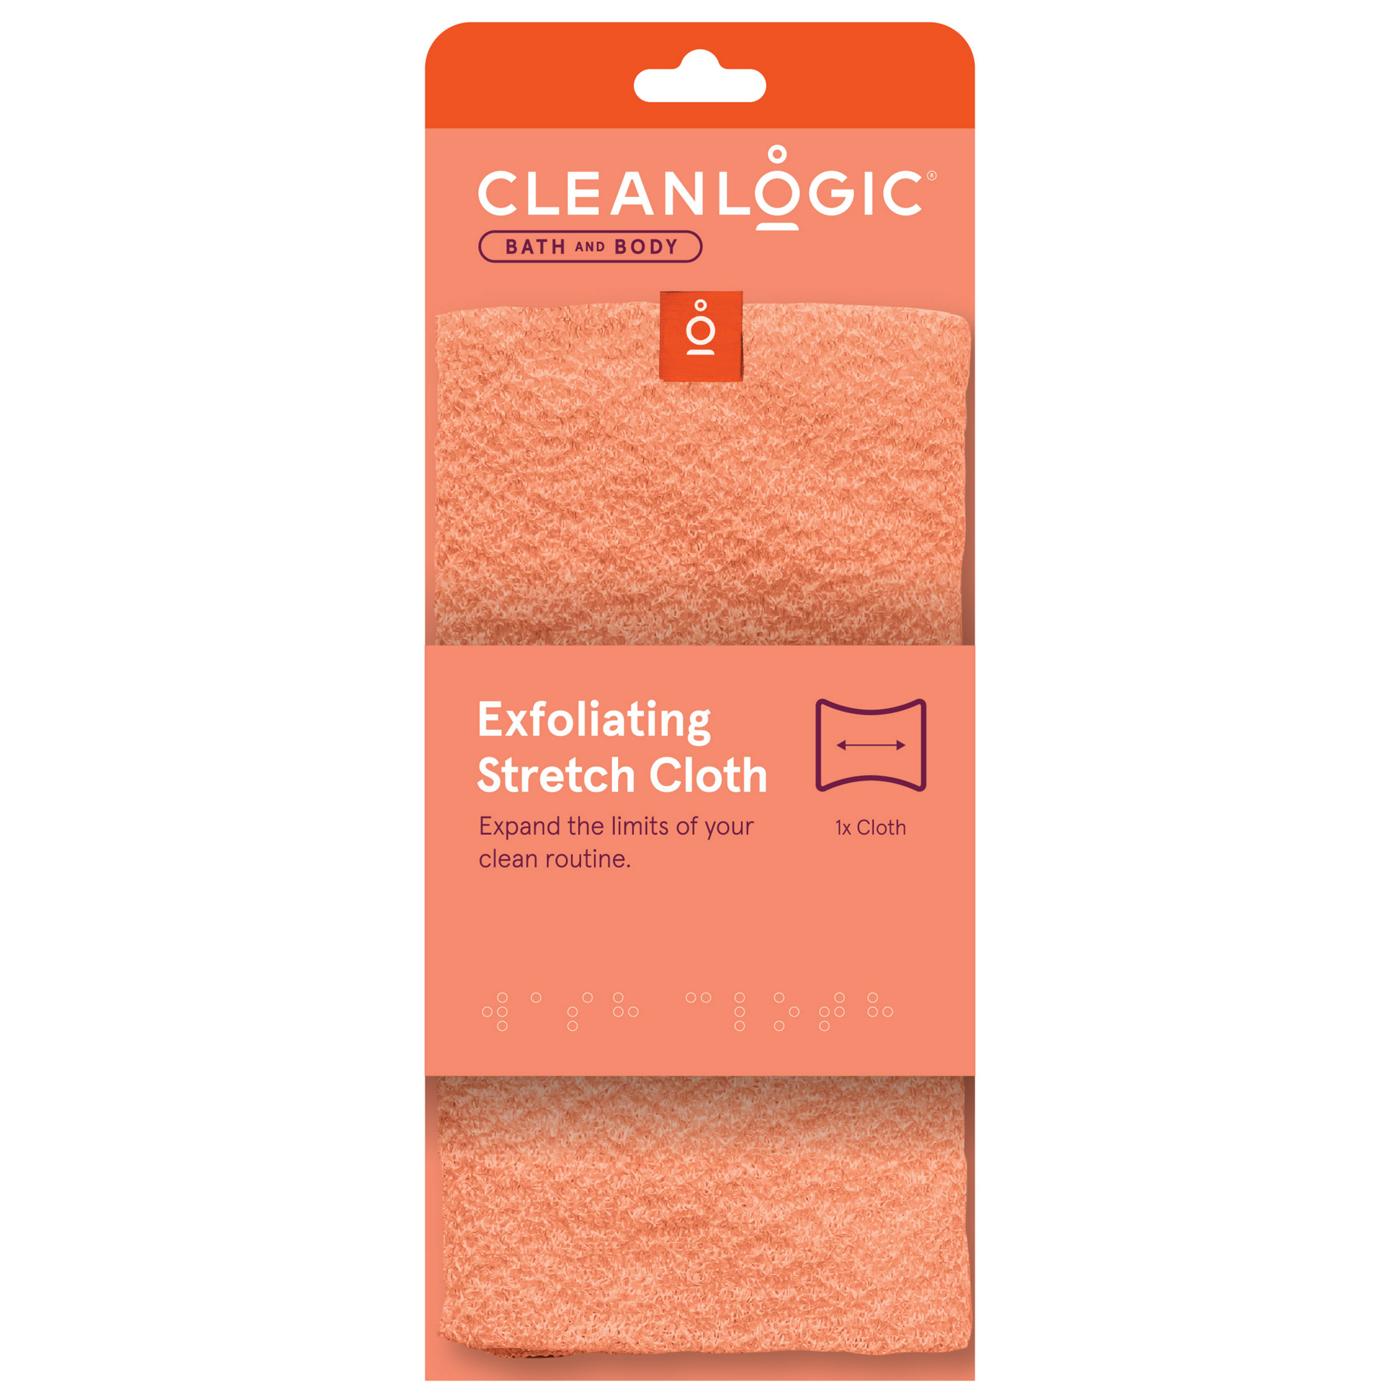 Cleanlogic Exfoliating Stretch Cloth; image 1 of 2